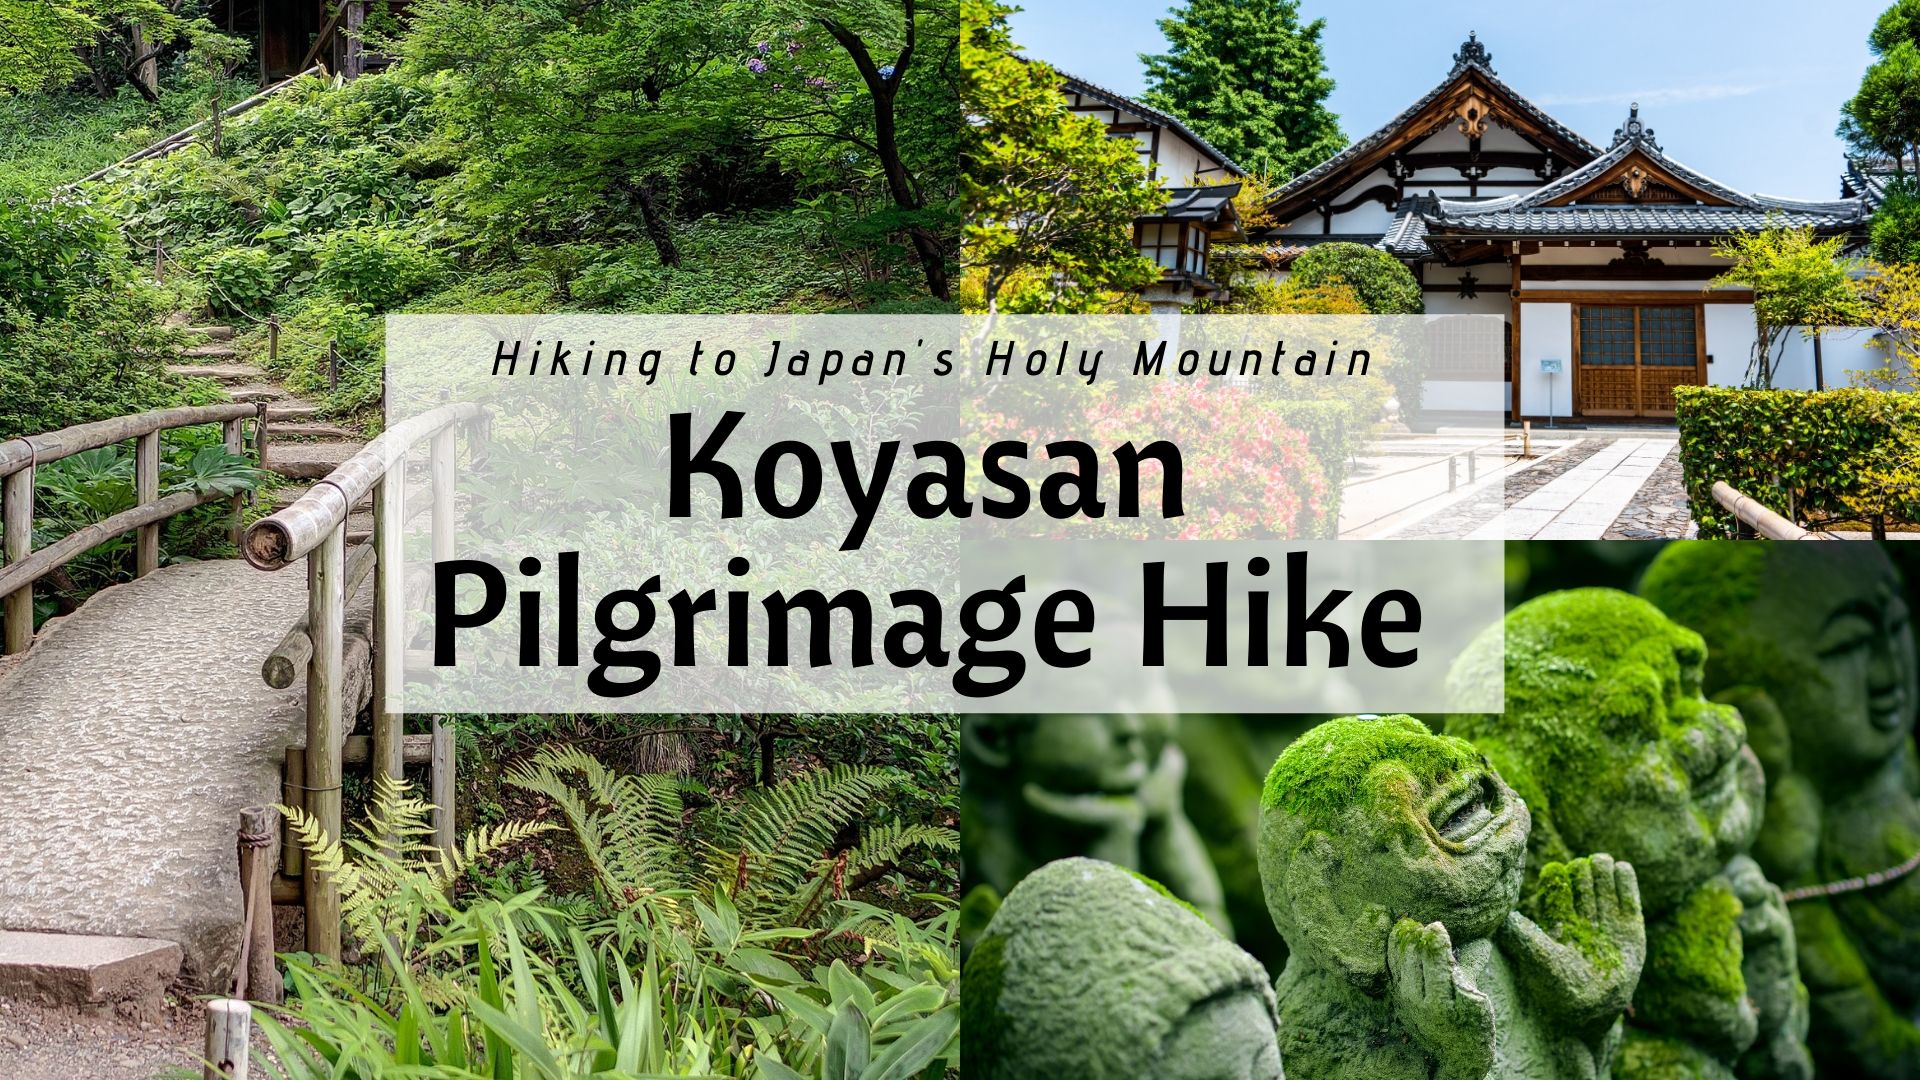 Hiking Koyasan pilgrimage hike in Japan, Mt. Koya hike pilgrimage from Osaka, holy mountain hike cover